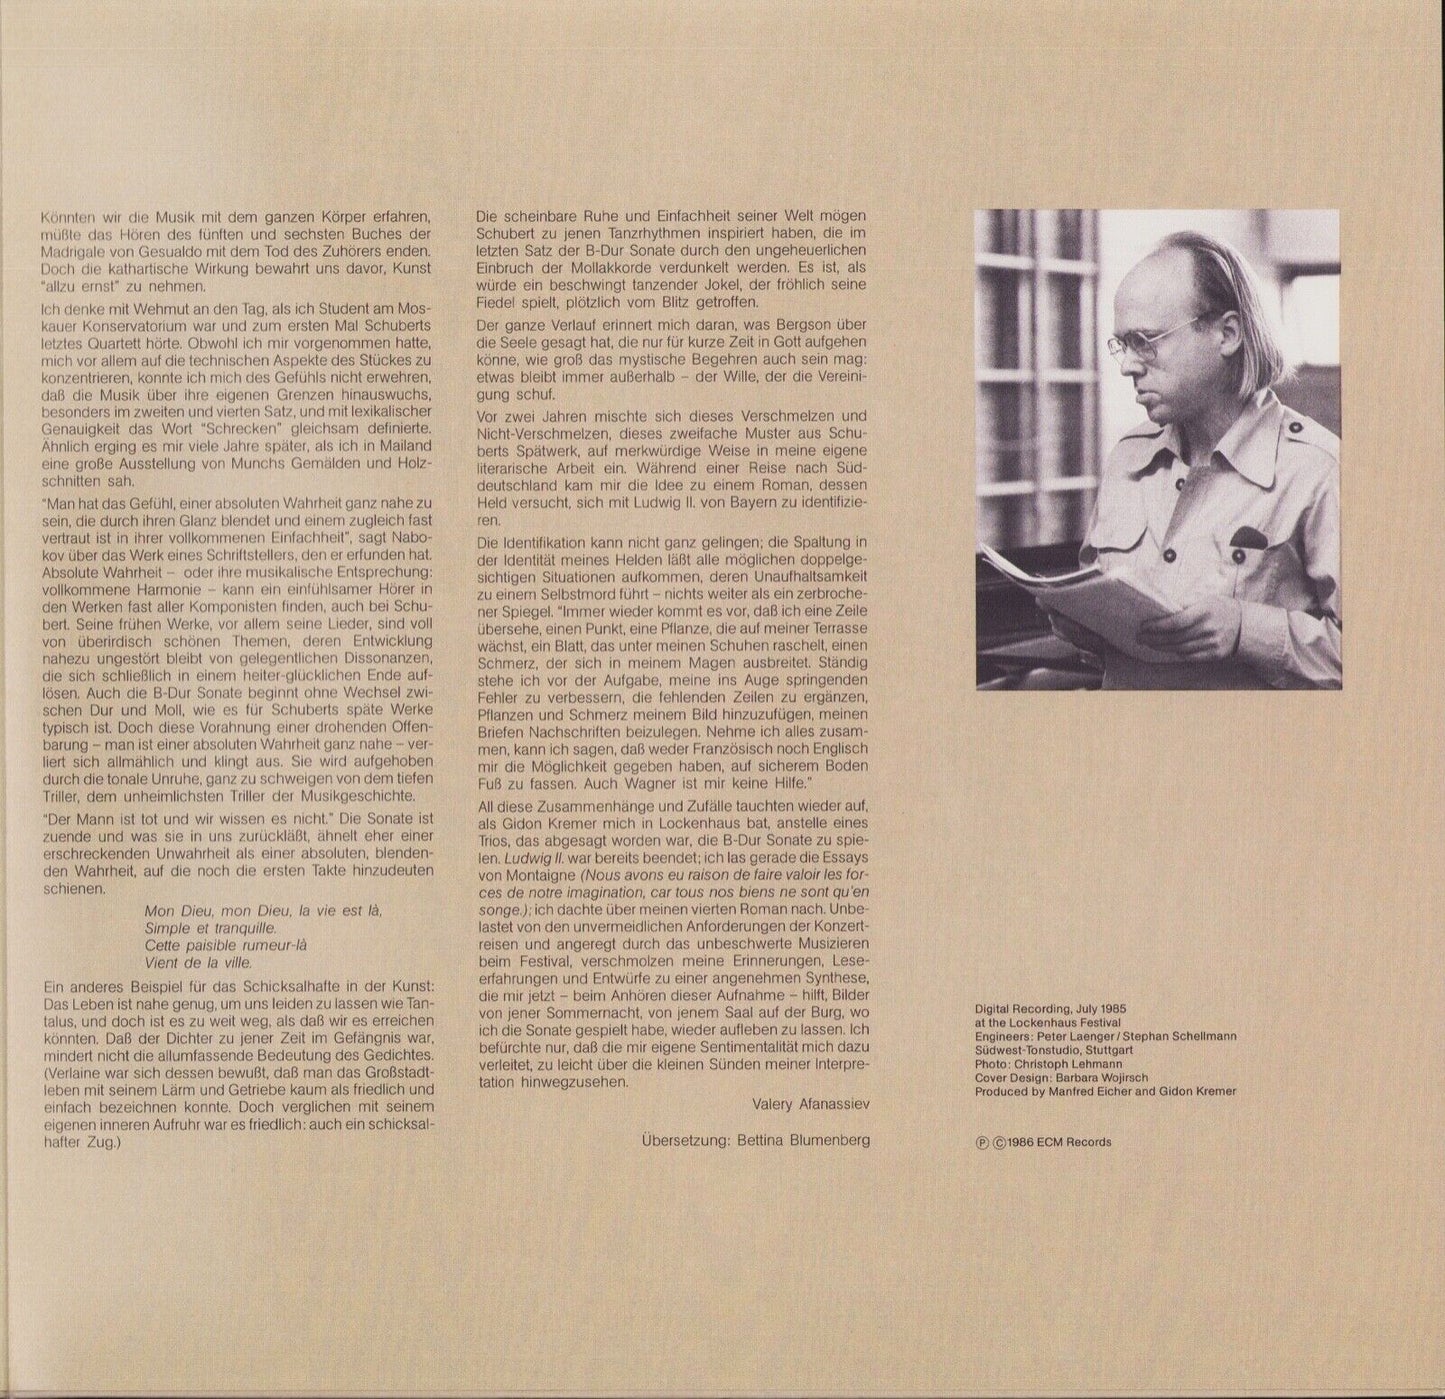 Gidon Kremer/Franz Schubert/Valery Afanassiev - Edition Lockenhaus Vol. 3 Vinyl LP